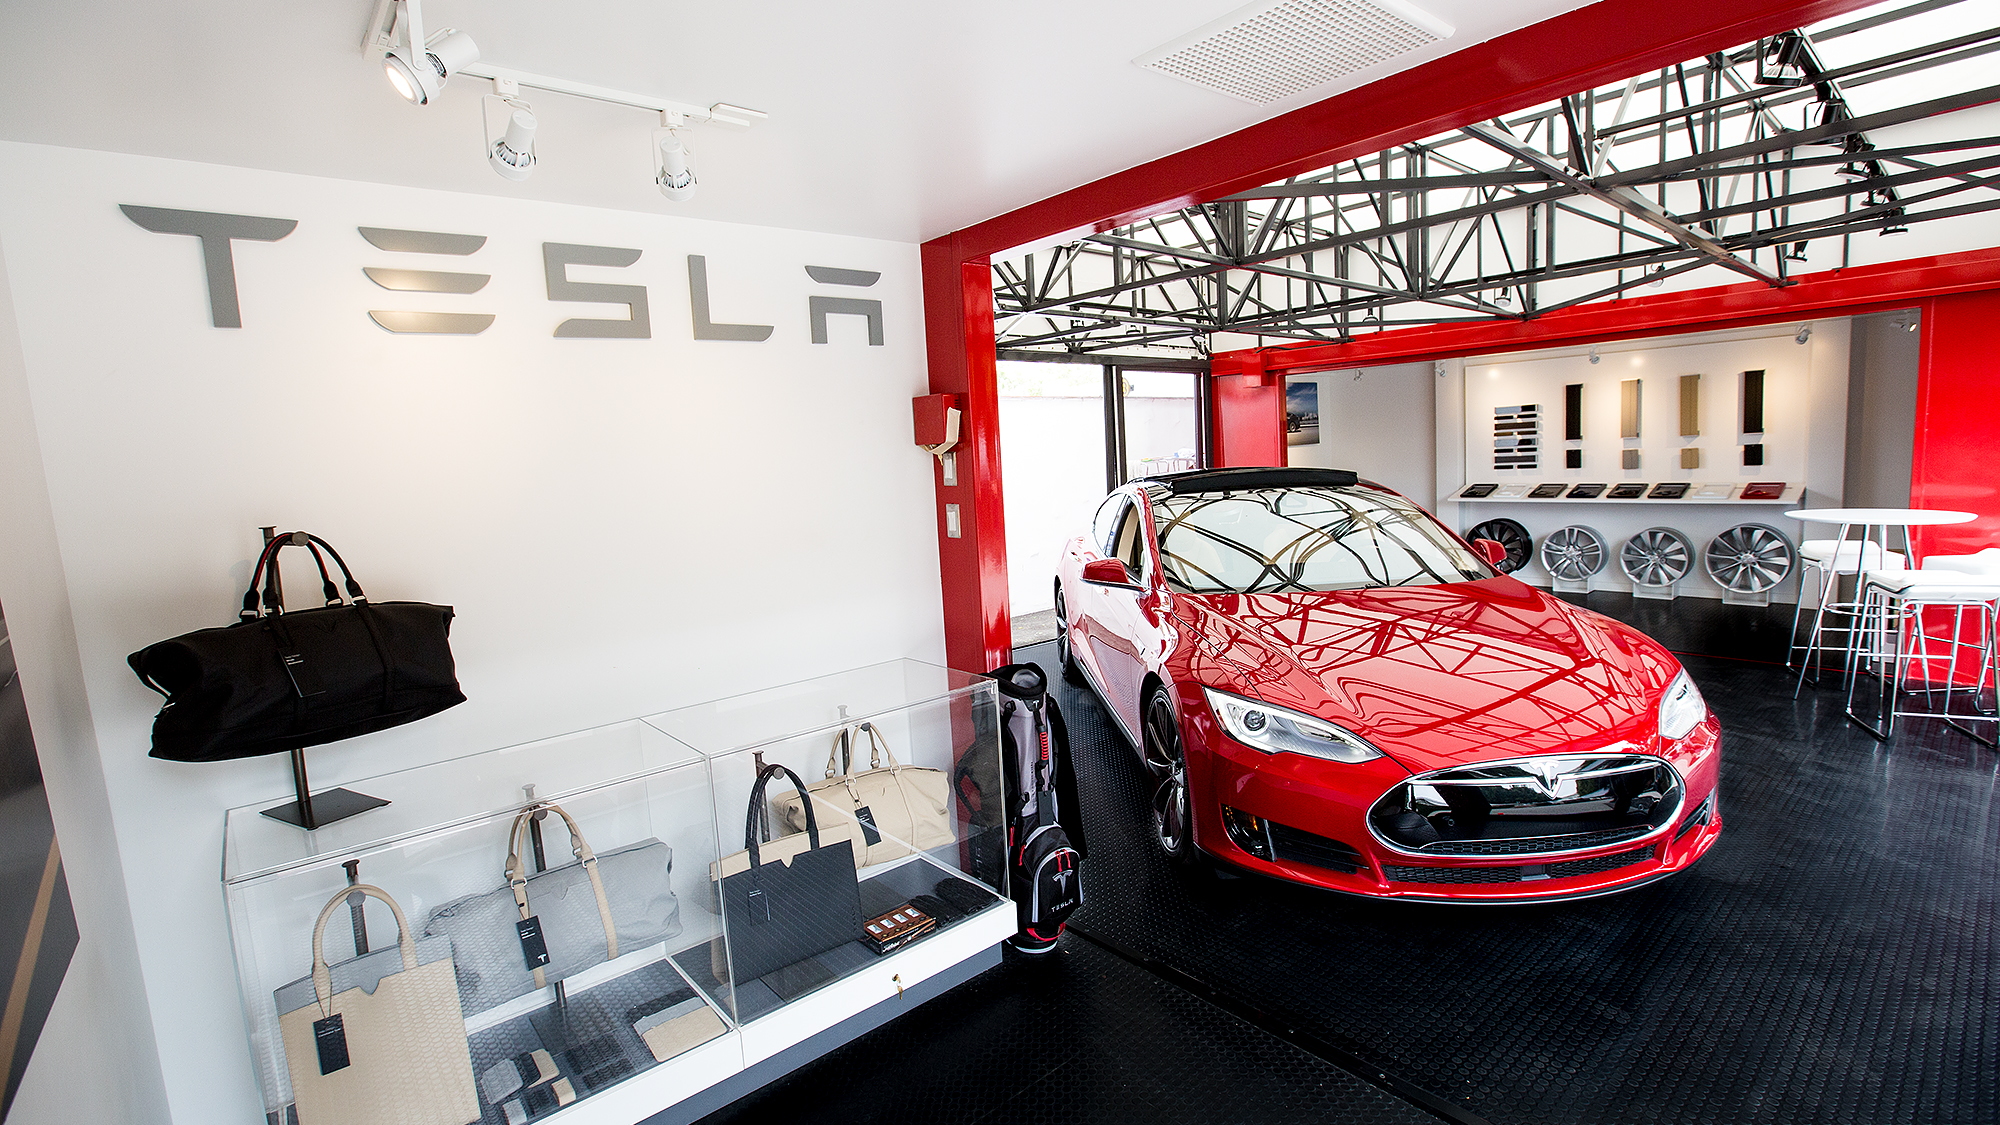 Tesla Motors 'popup store' to display electric cars, Santa Barbara, CA, May 2015